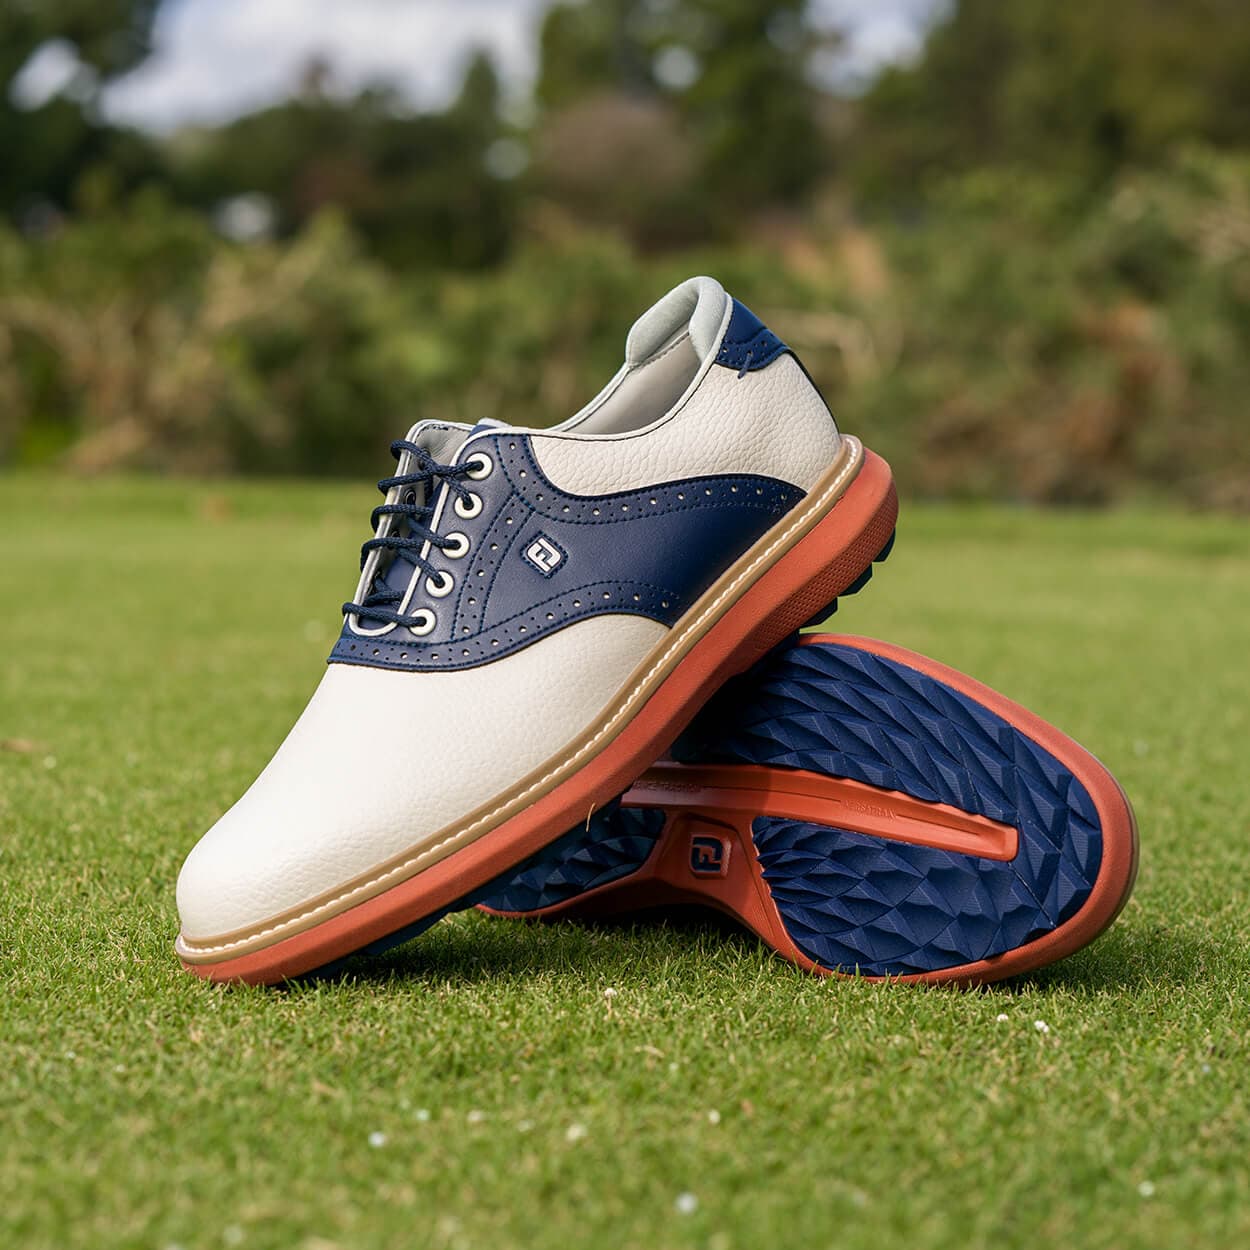 Men's Golf: Shoes, Clothing, & More | FootJoy UK